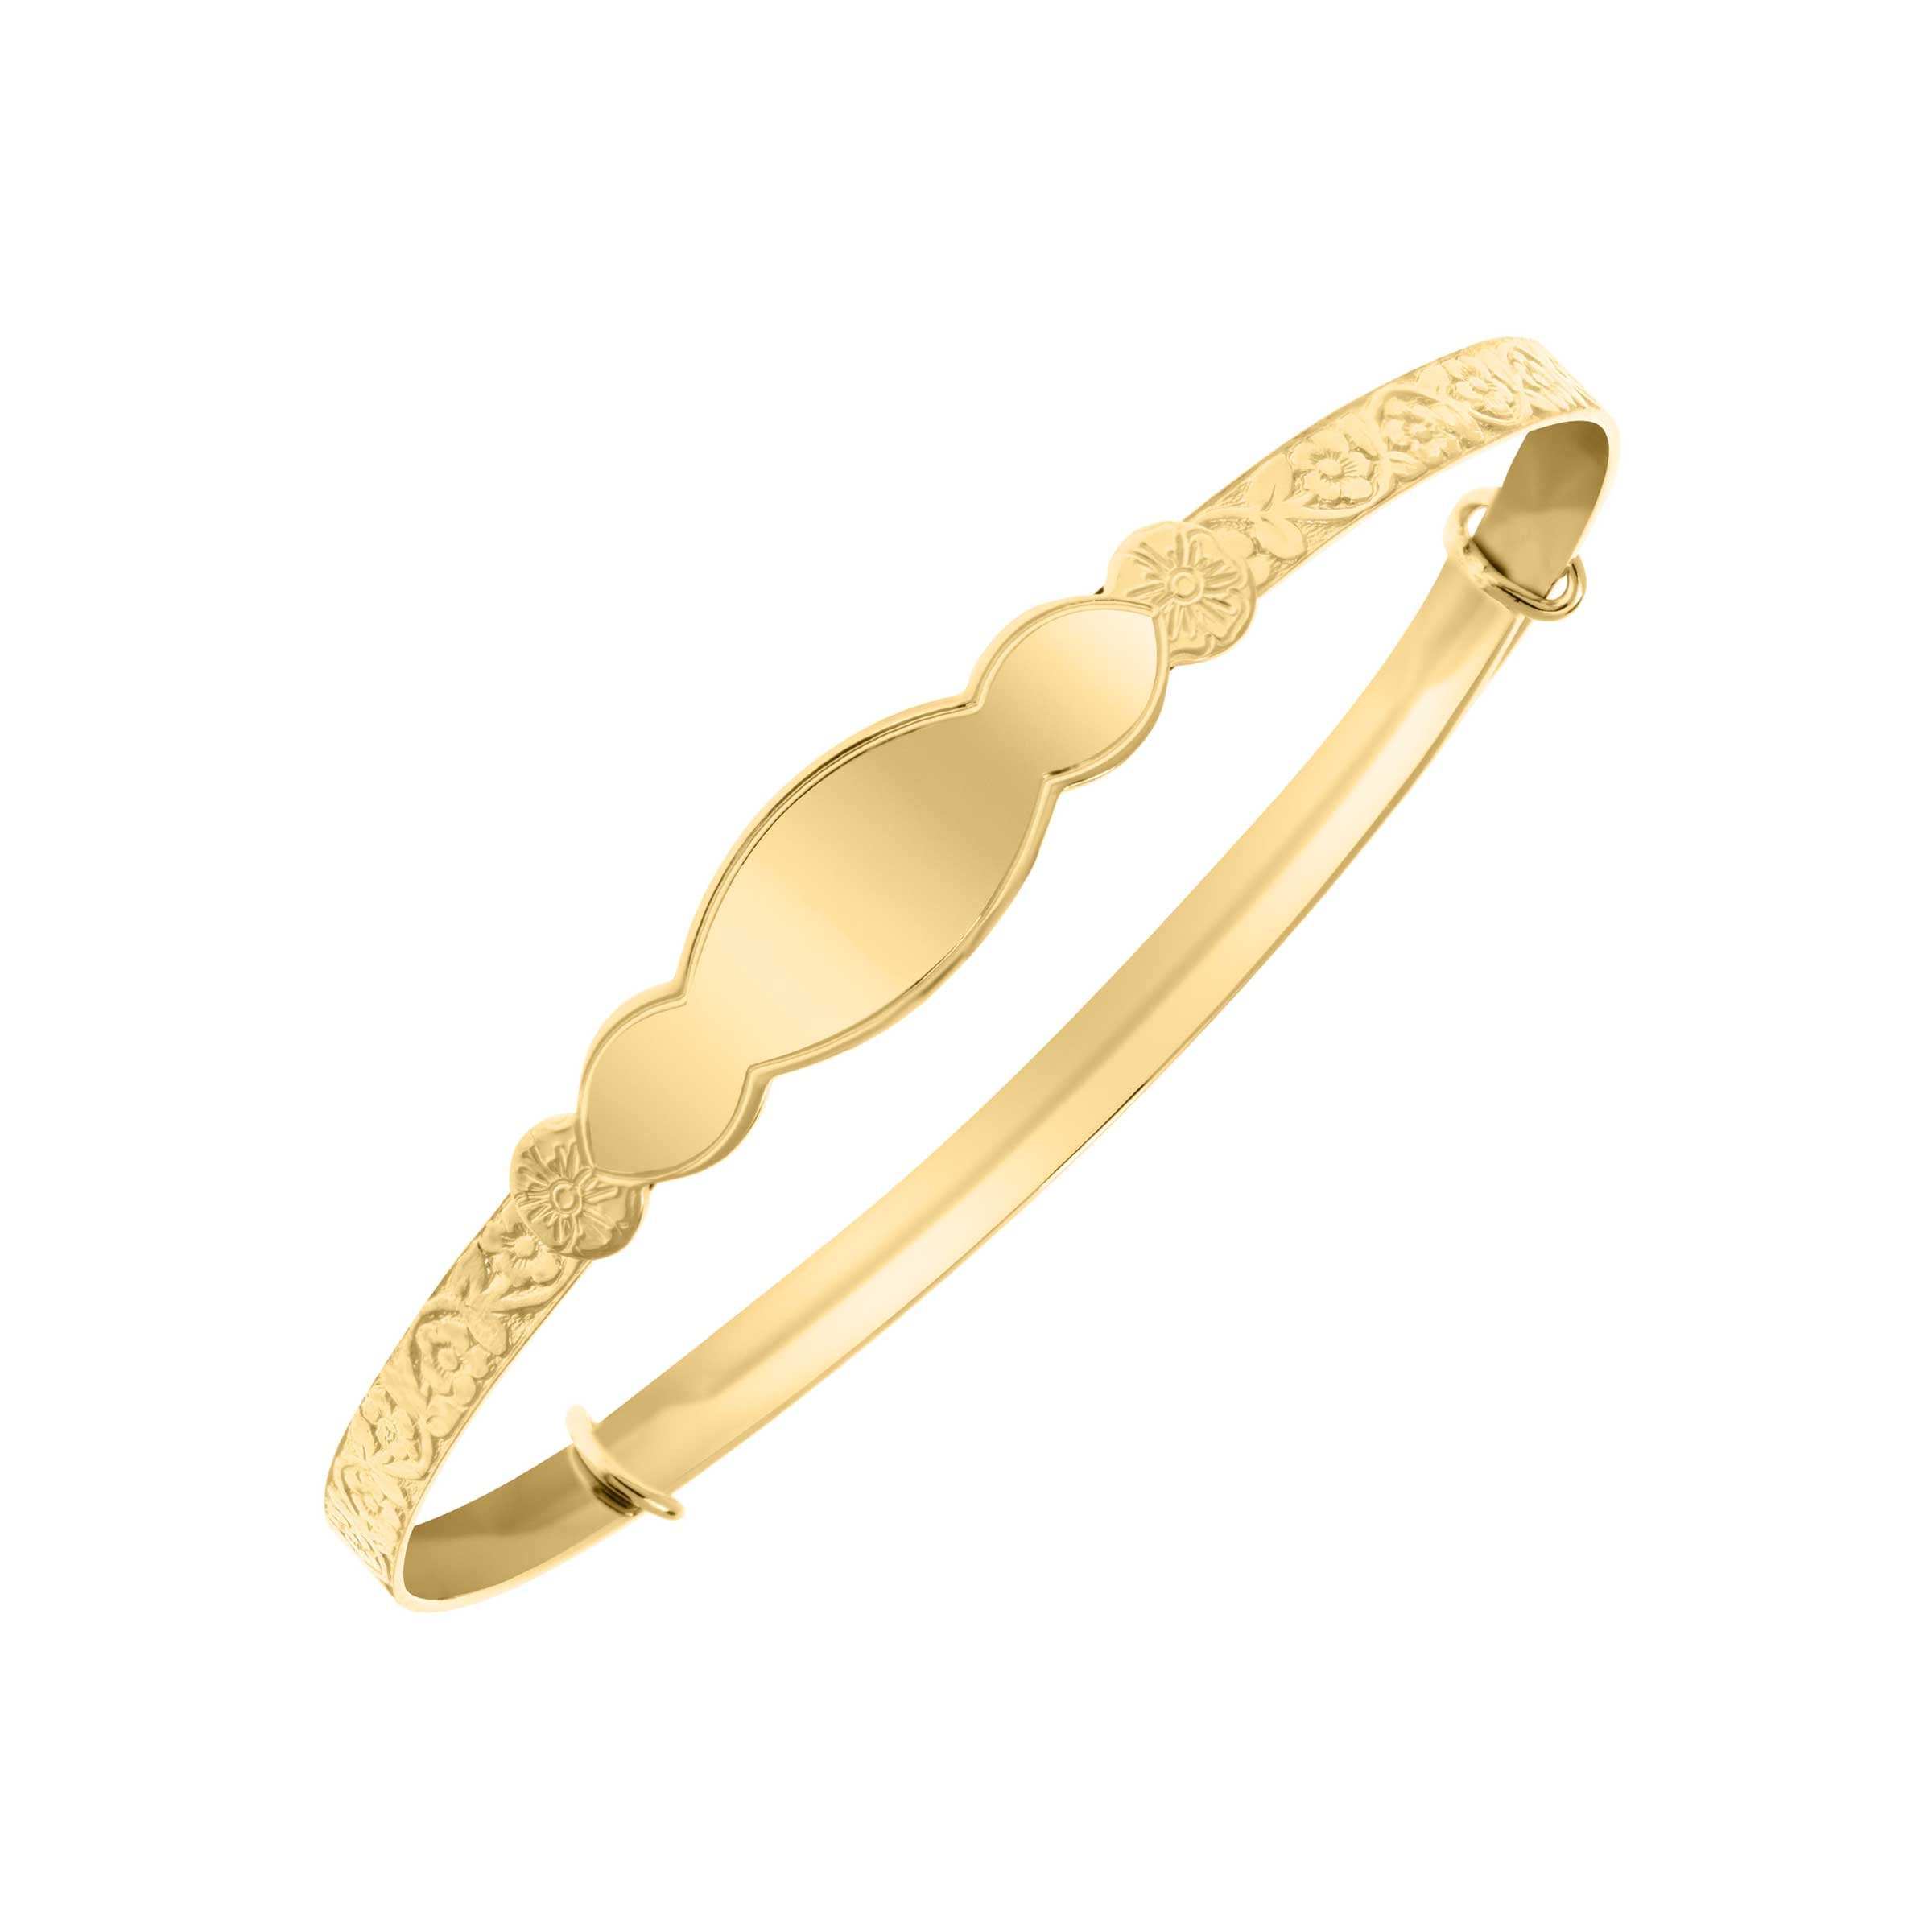 Beads bracelet for men to engrave - Petits Tresors